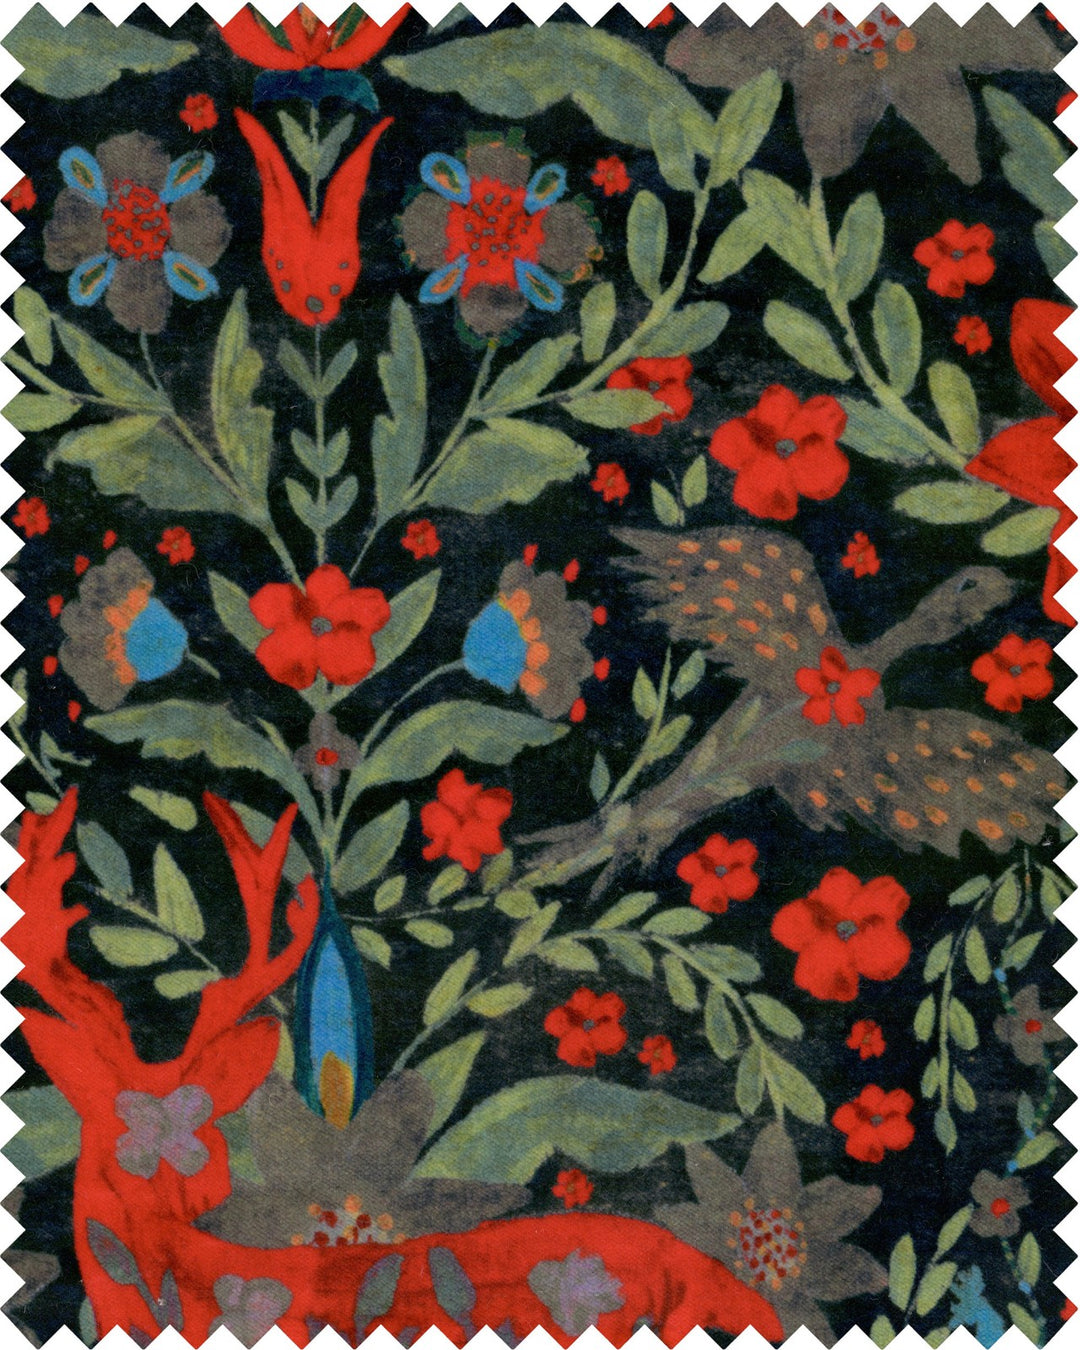 Mind-The-Gap-Tyrol-collection-Der-Konig-Velvet-stage-birds-jewel-tones-black-velvet-textile-fabrics-Nordic-Alpine-Apres-ski-cabin-lodge-Folklore-printed-illustration-fabric  